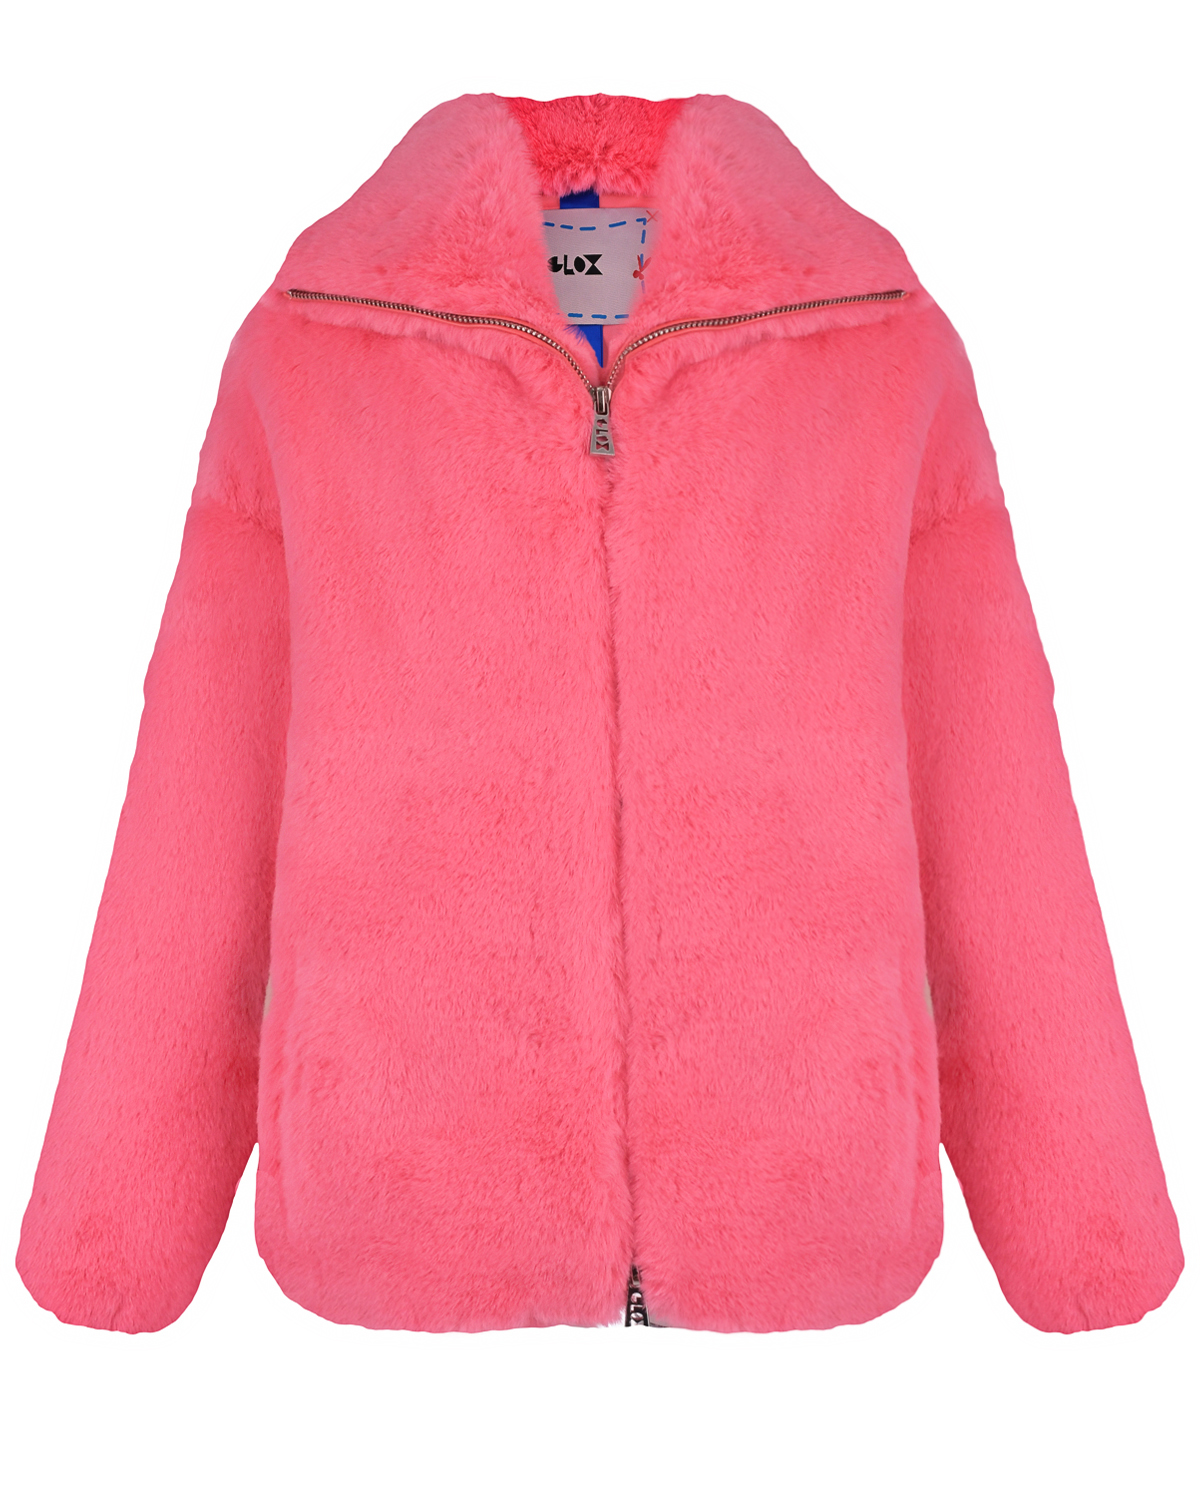 Розовая куртка из эко-меха Glox, размер 40, цвет розовый - фото 1